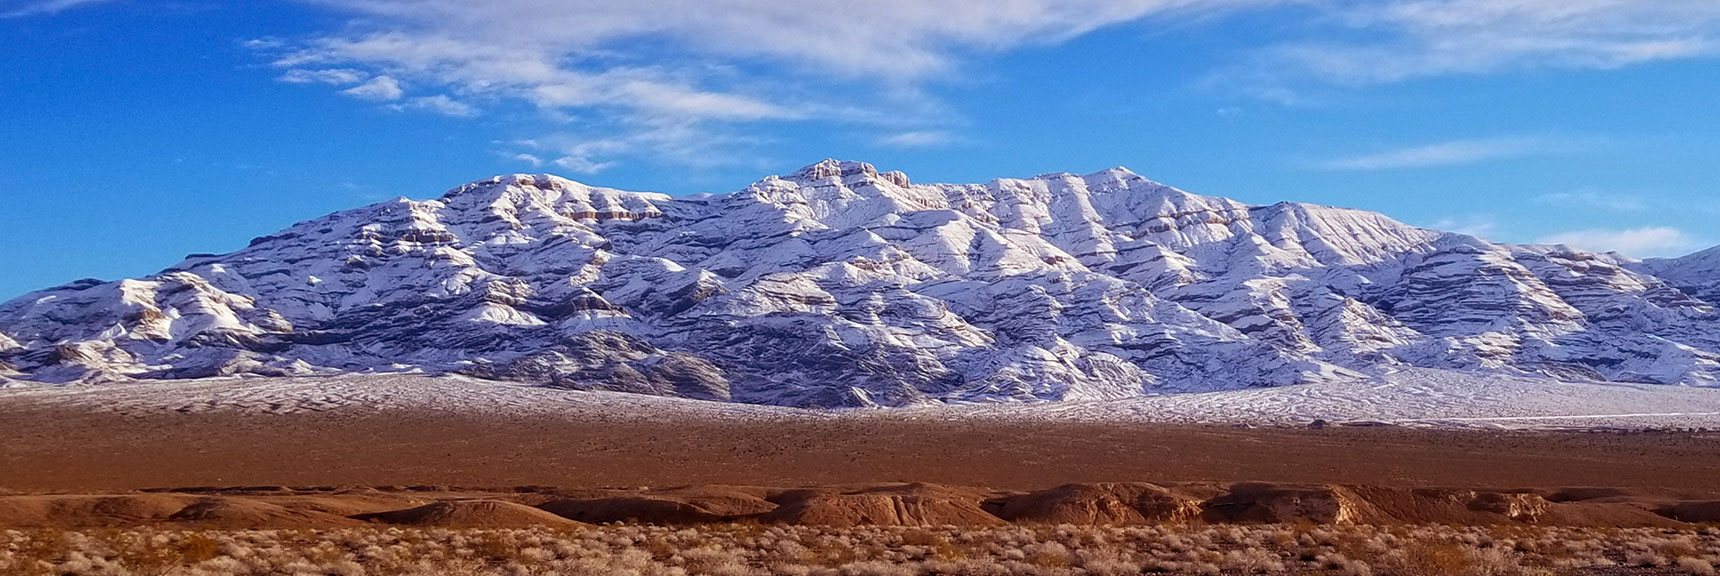 Gass Peak Snowcapped, Las Vegas, Nevada